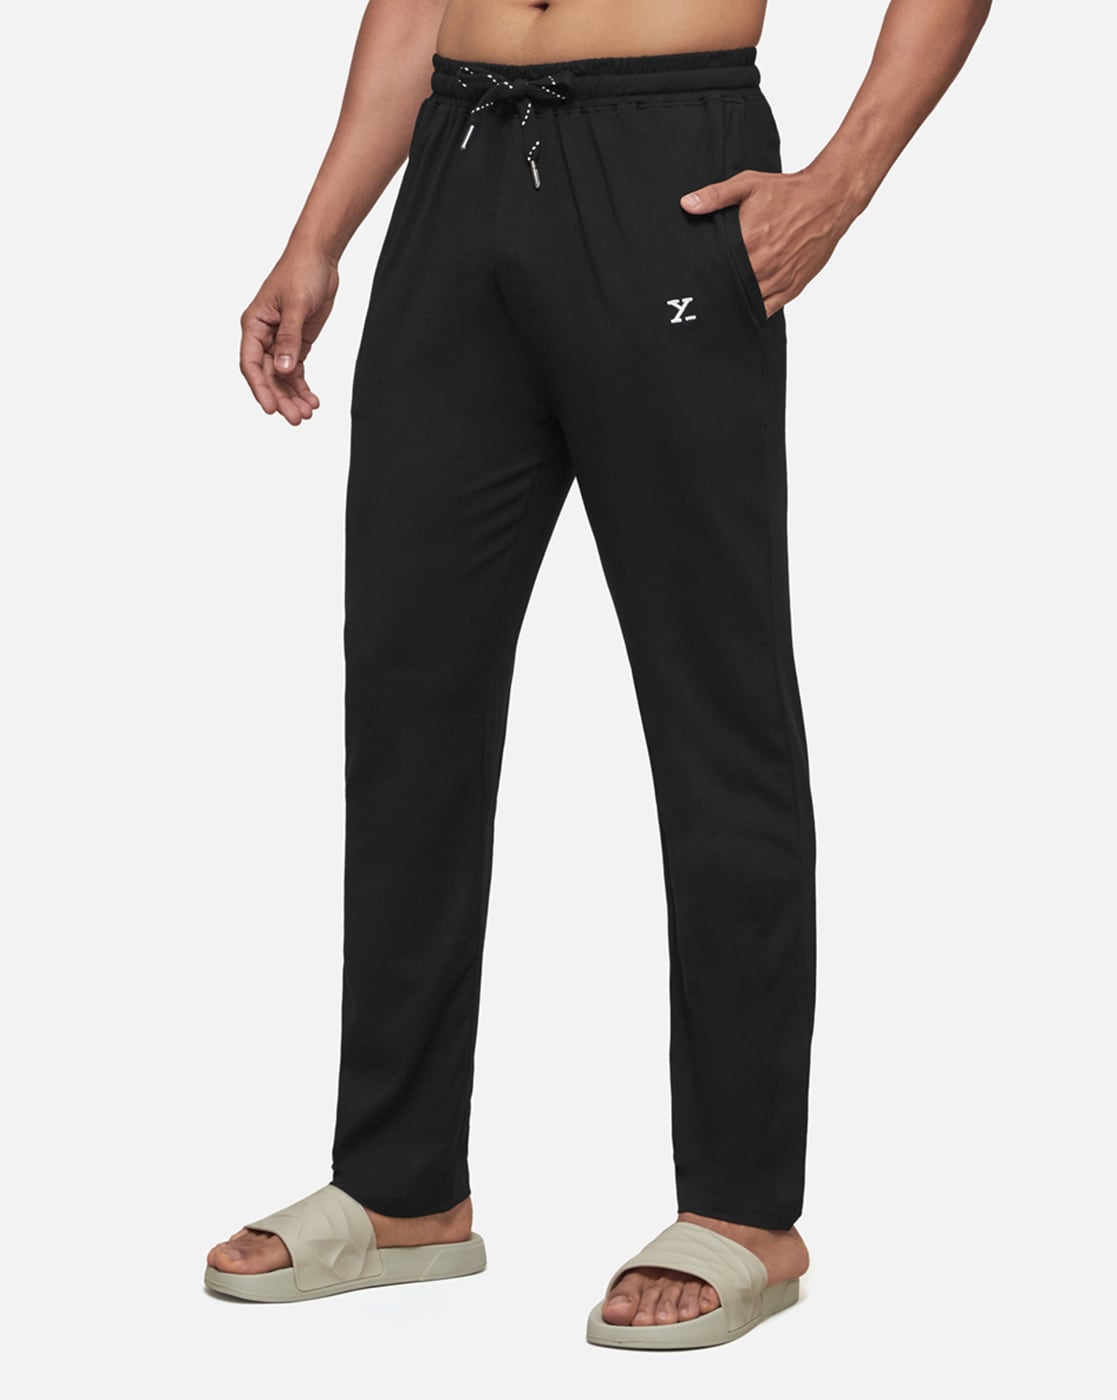 Buy Black Pyjamas for Men by XYXX Online